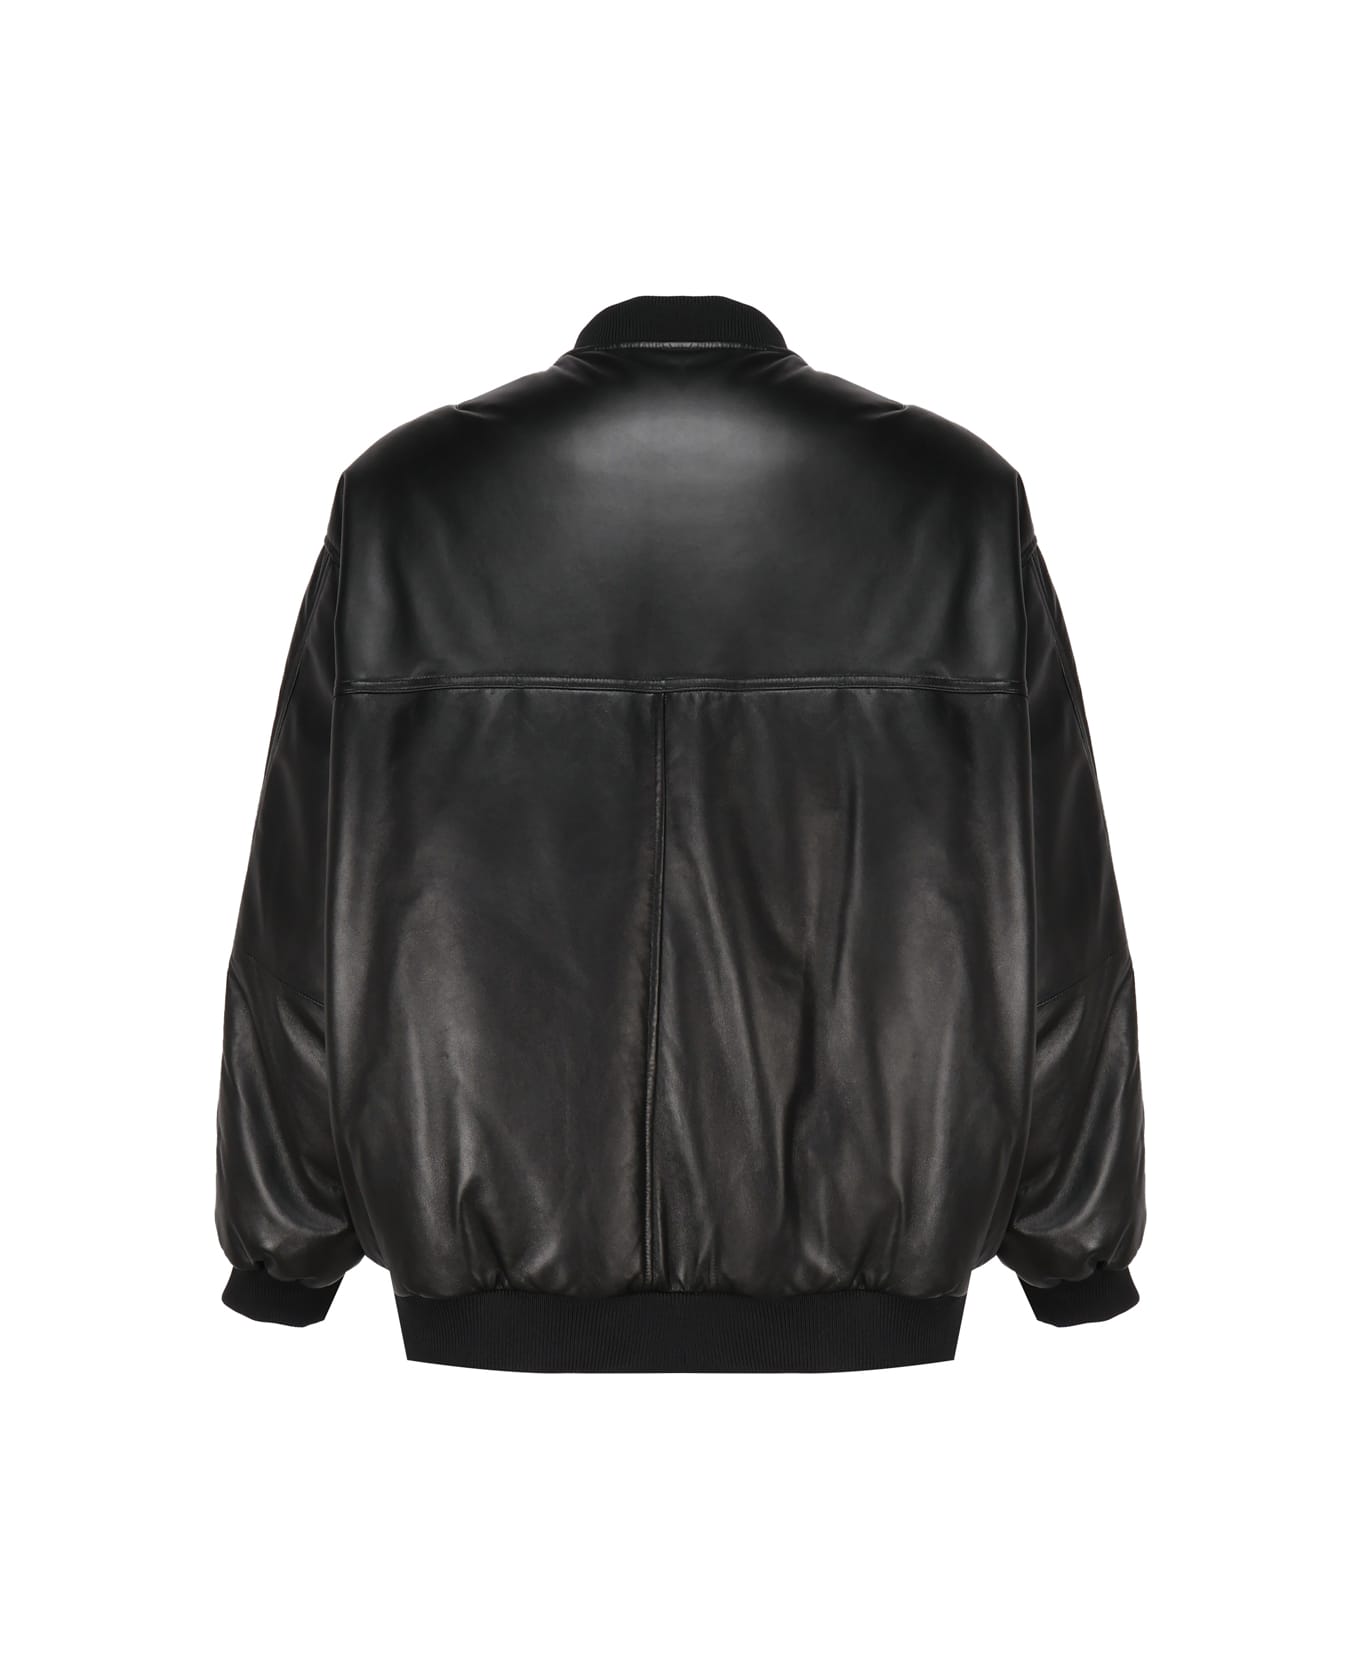 Moncler Genius Reversible Leather Jacket - Black